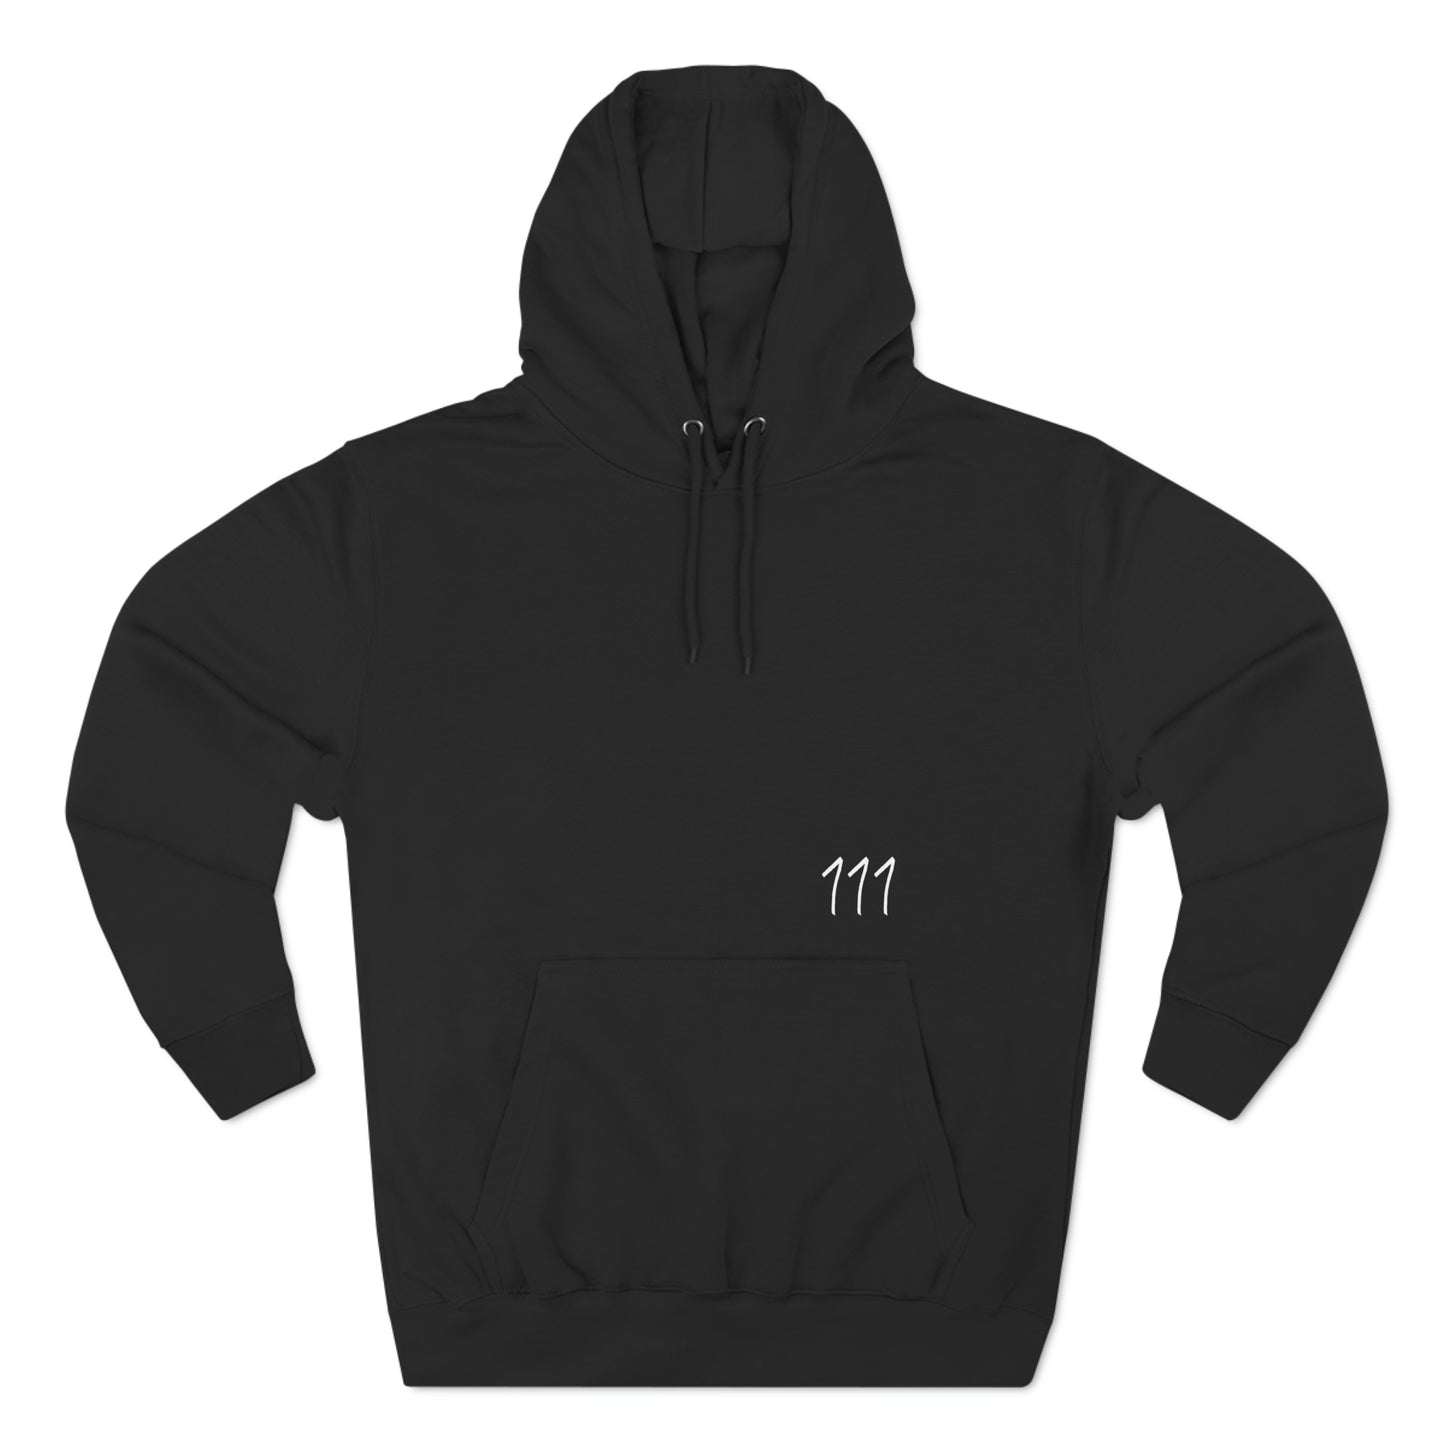 COLDWRLD* [111] success hoodie